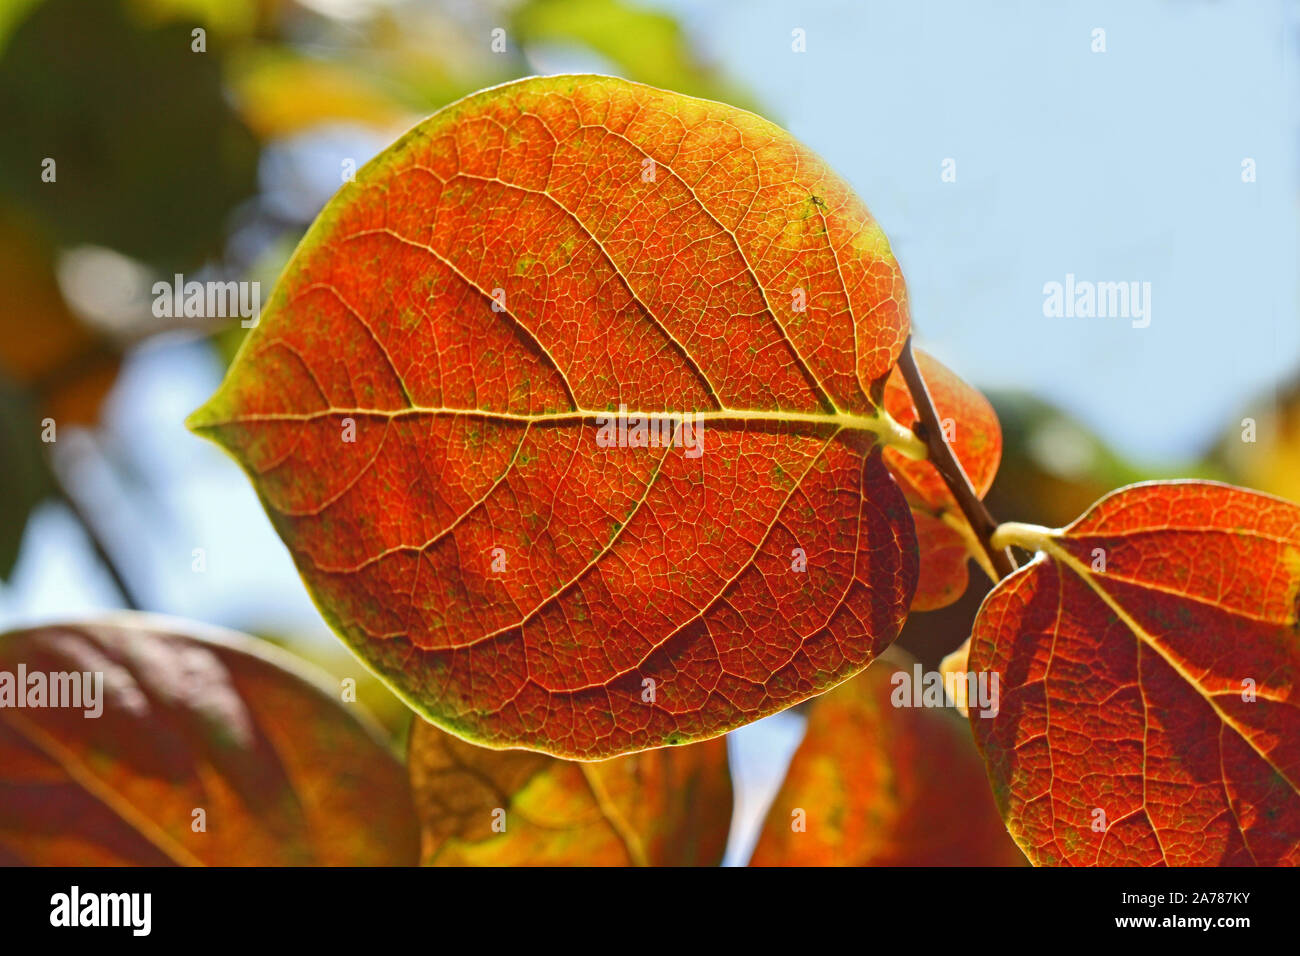 Persimone oder Blatt oder Kaki persimon Blatt diospyros kaki Familie ebenaceae Nahaufnahme im Herbst mit schönen Farben in Italien Stockfoto